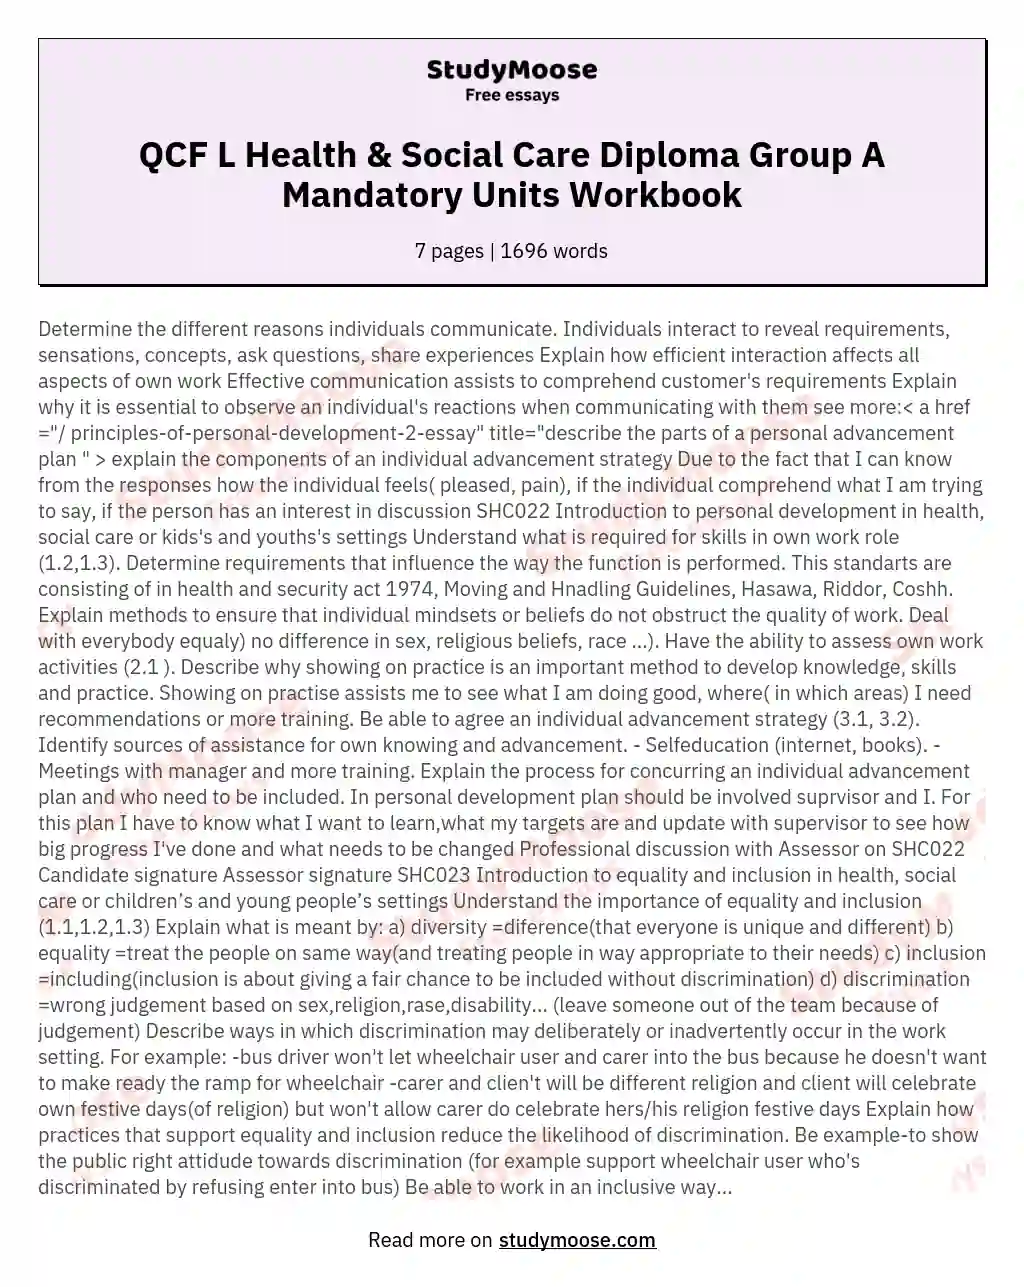 QCF L Health & Social Care Diploma Group A Mandatory Units Workbook essay